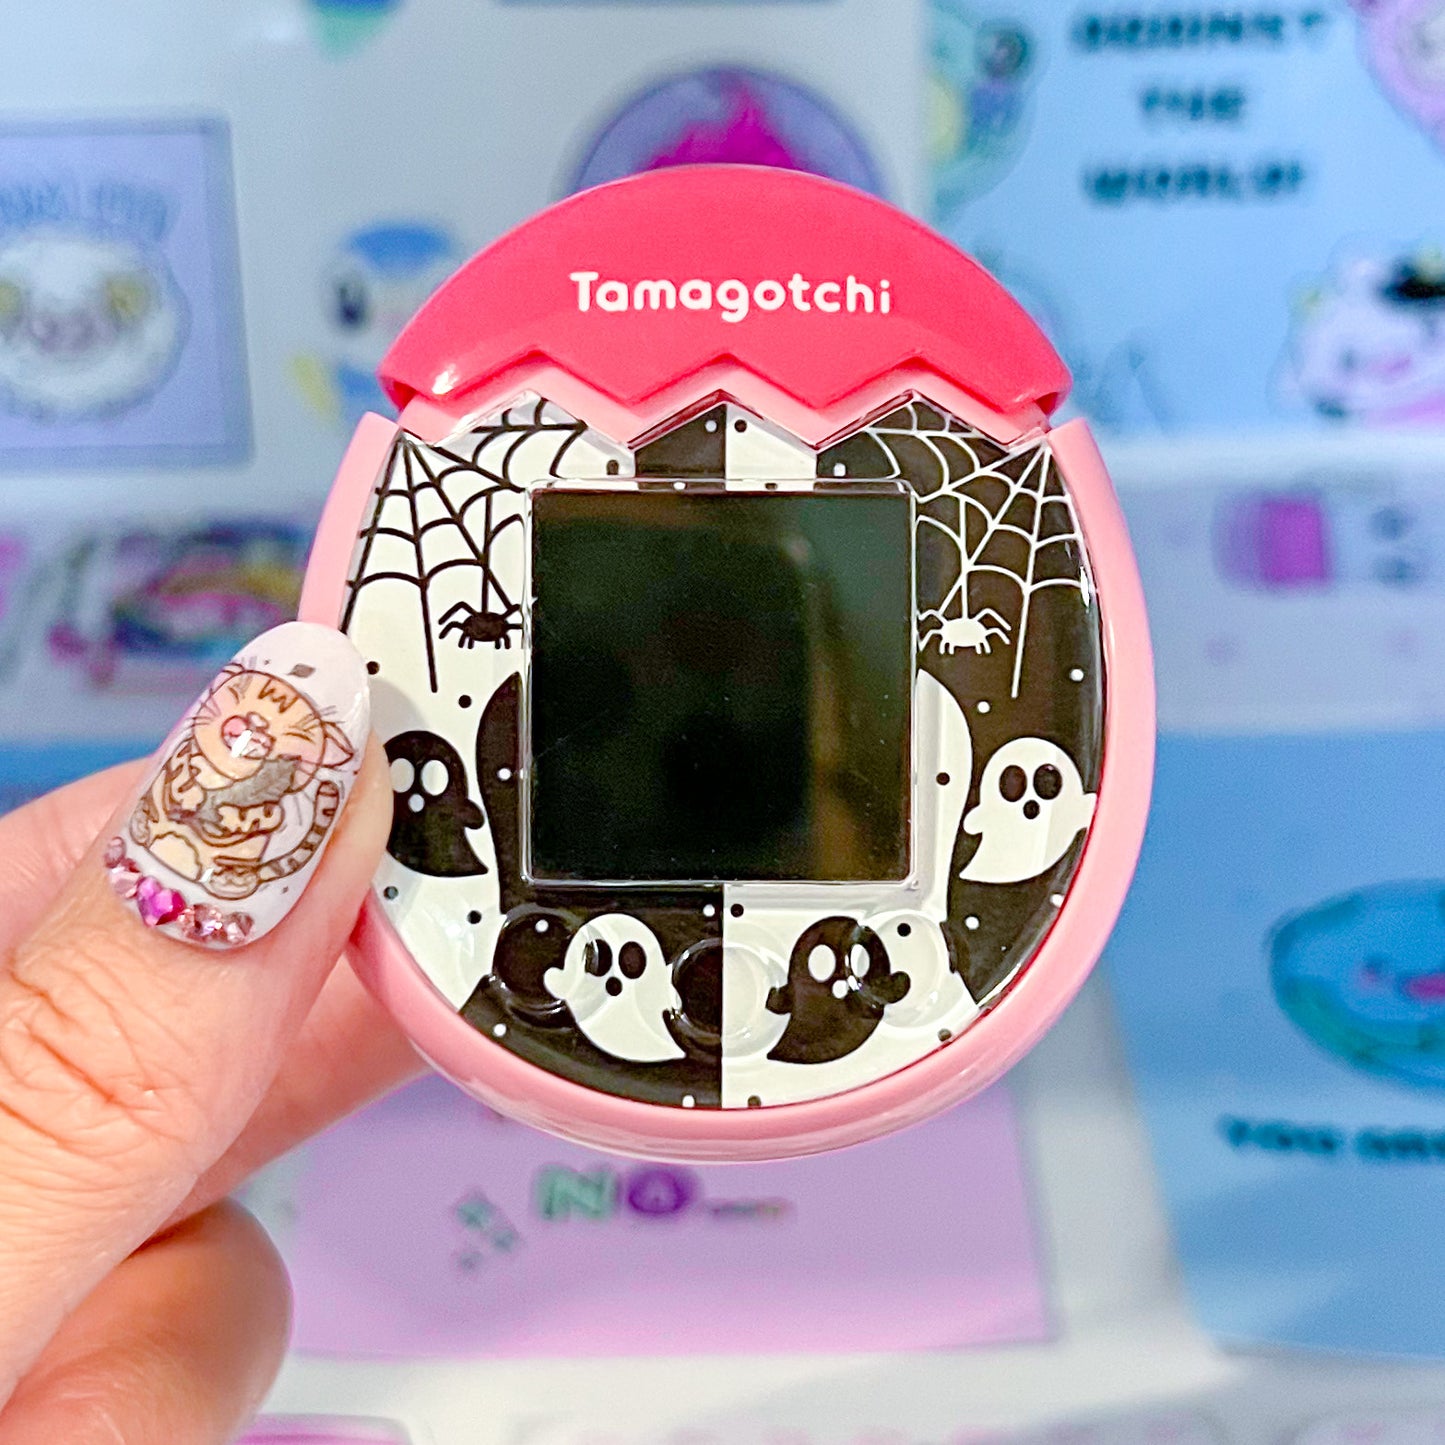 Tamagotchi Pix Faceplates - Black and White Ghosts